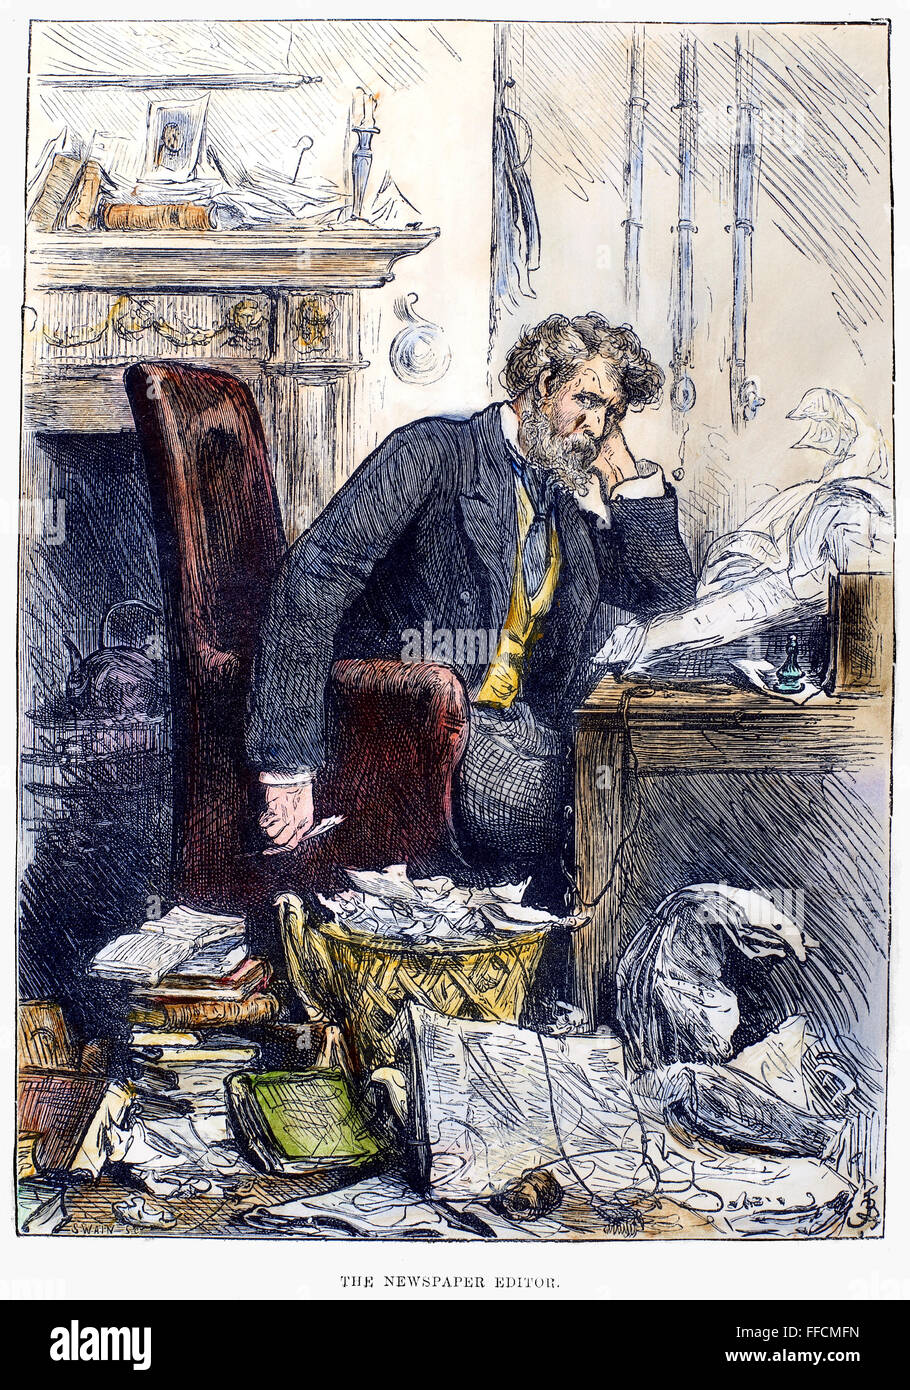 EDITOR di giornale, 1880. /NWood incisione, inglese, 1880. Foto Stock